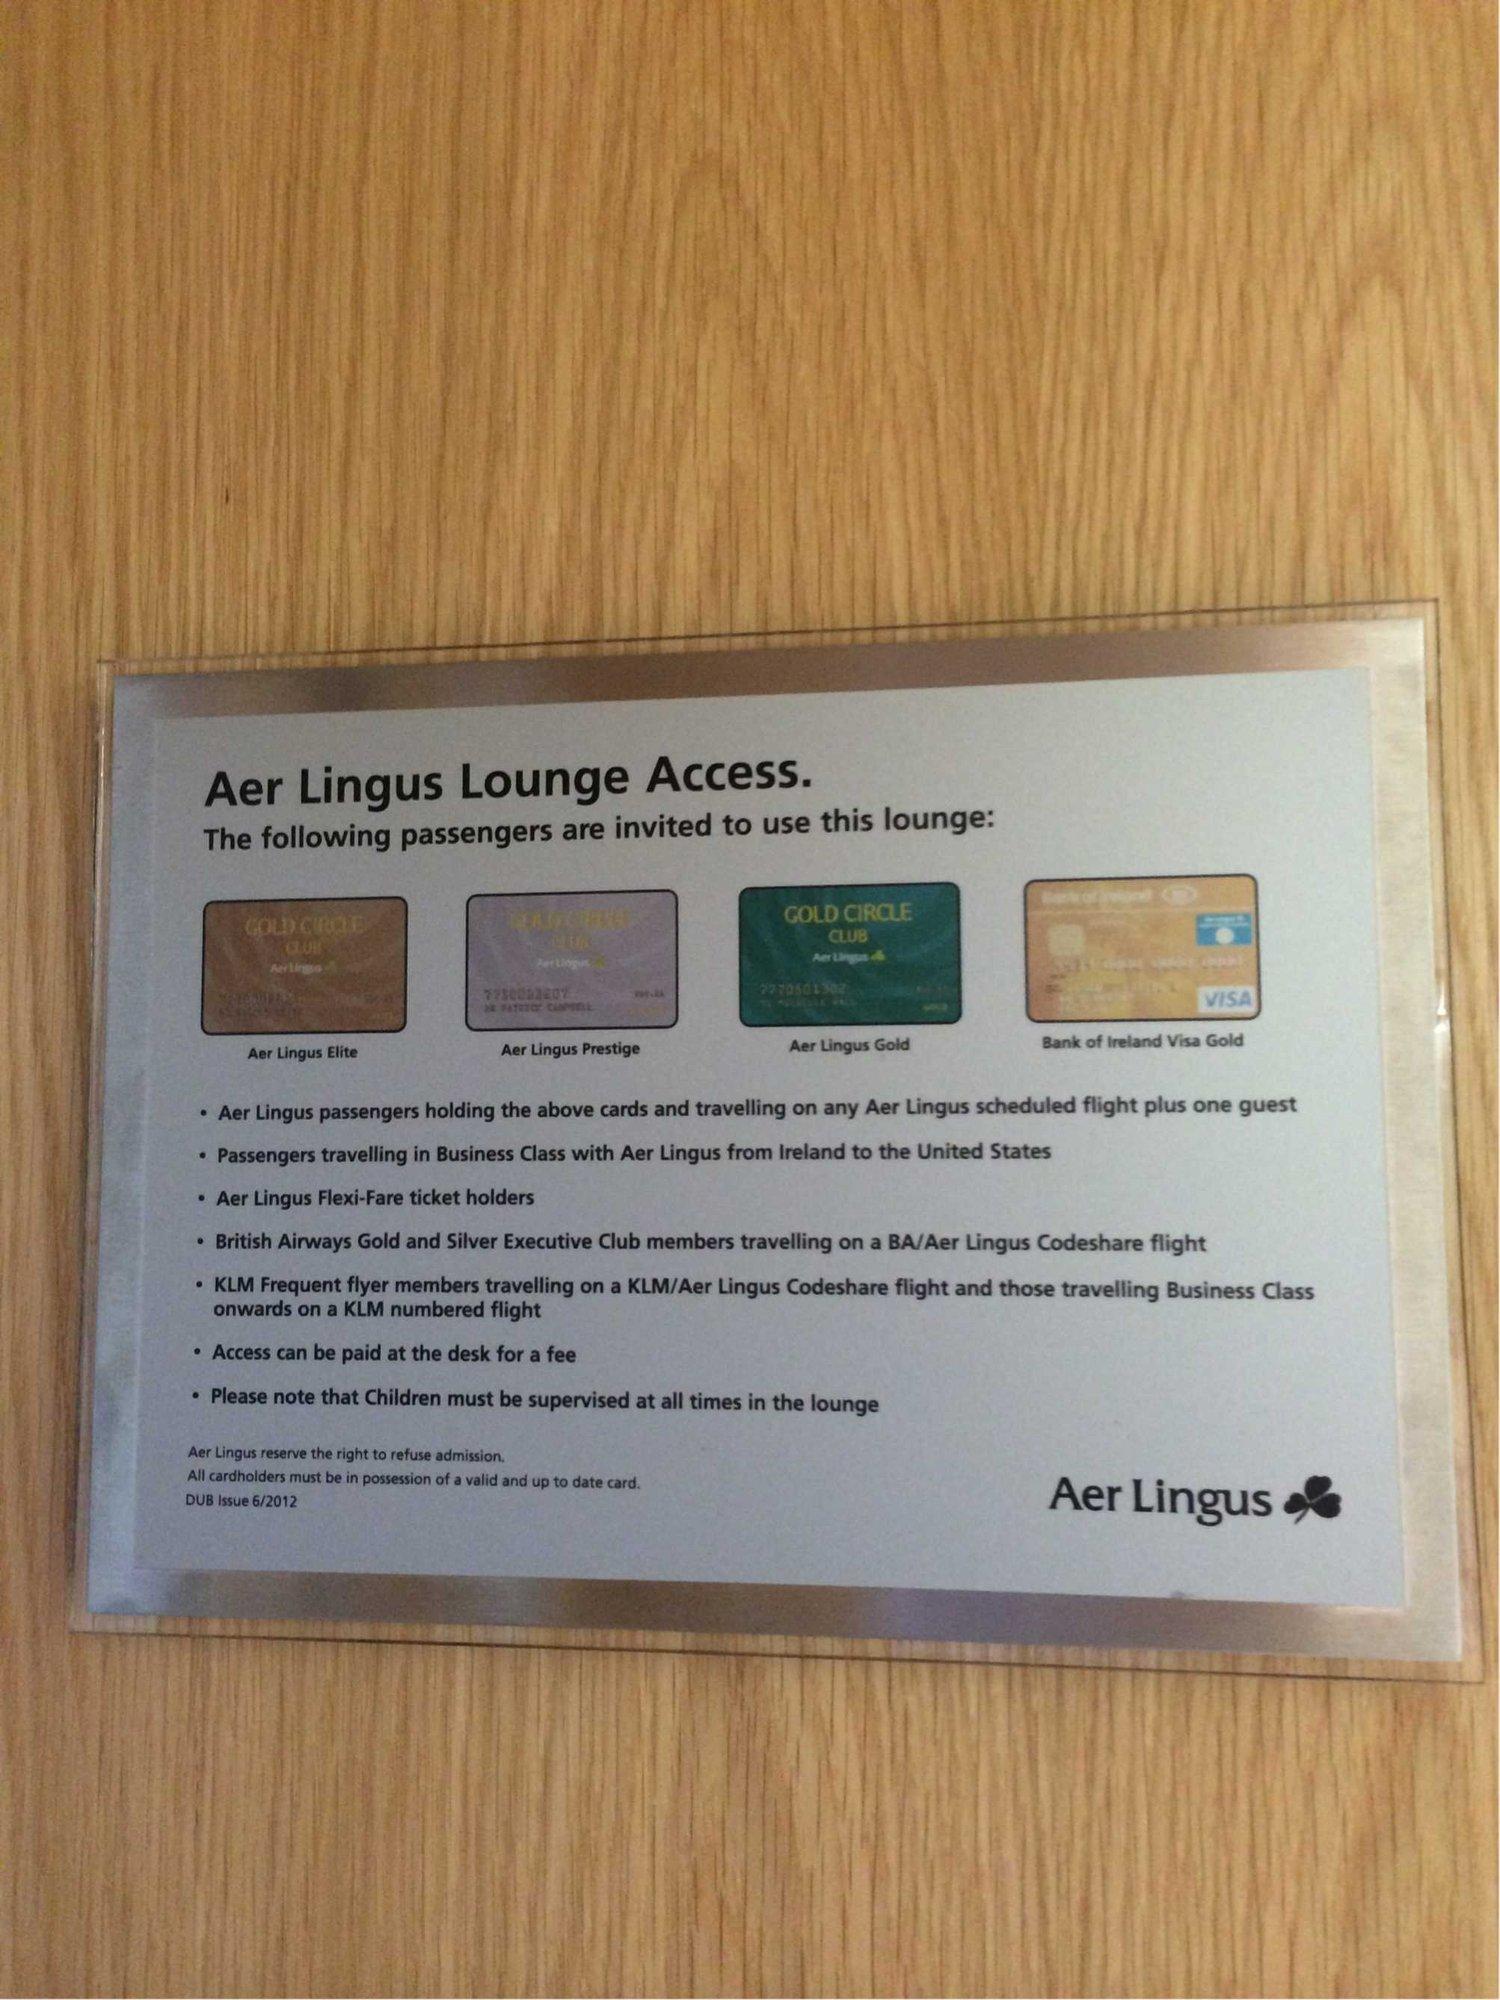 Aer Lingus Lounge image 7 of 10